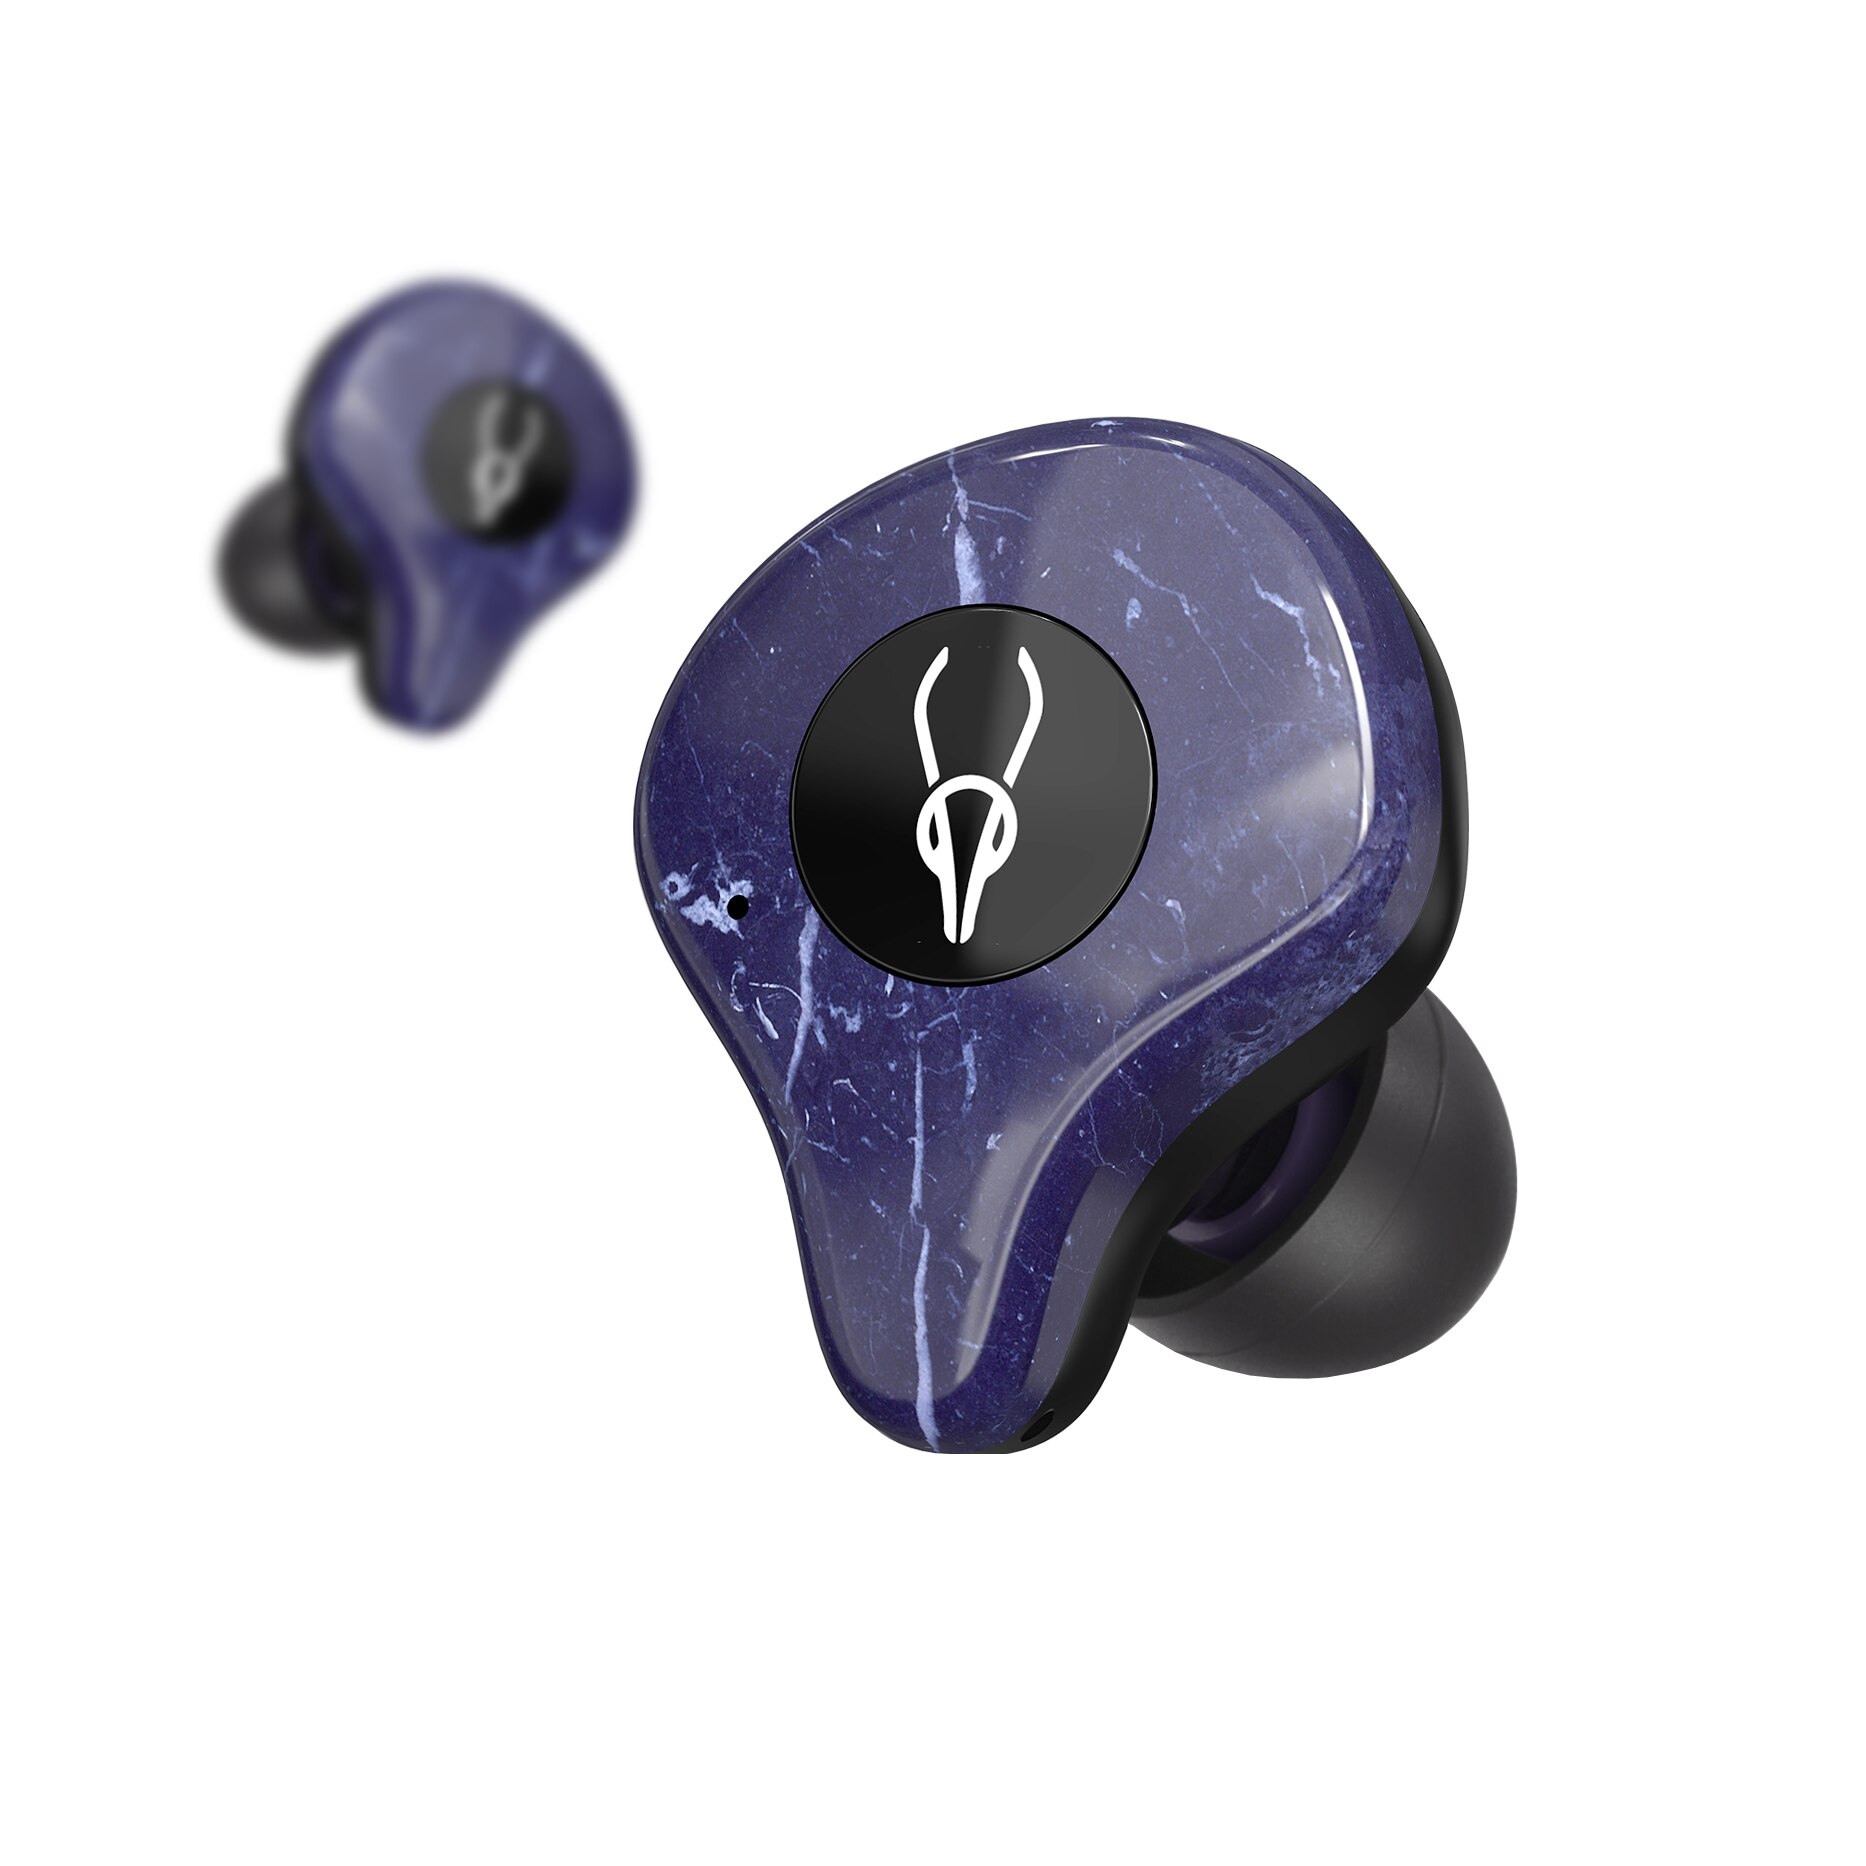 Nyeste sabbat x12 ultra tws trådløs bluetooth 5.0 øretelefon mini vandtæt sports stereo i øret trådløse headset øretelefoner: Jia blå sten